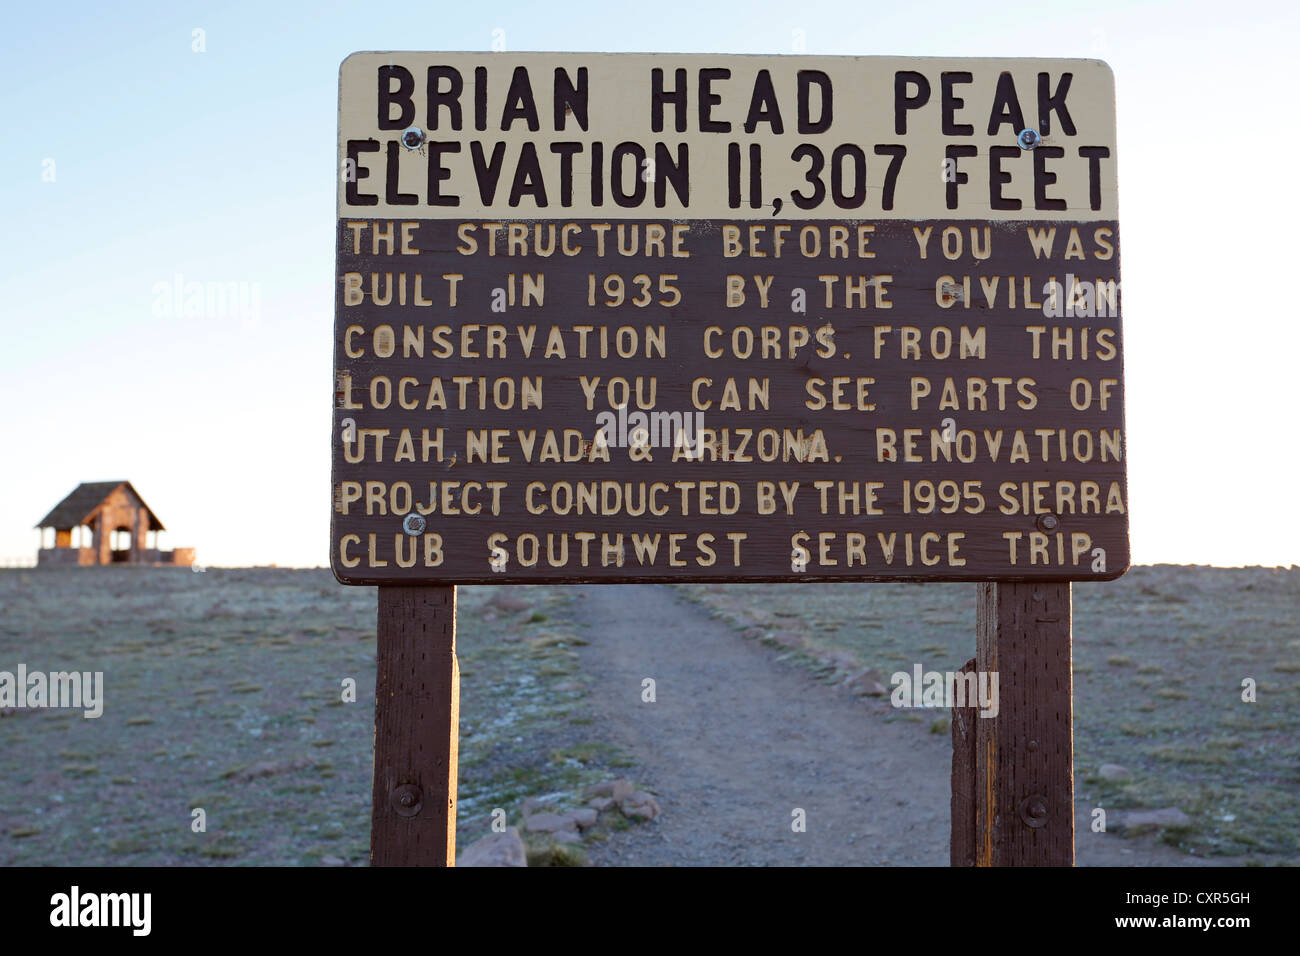 Information board at the summit of Brian Head Peak, Utah, USA Stock Photo